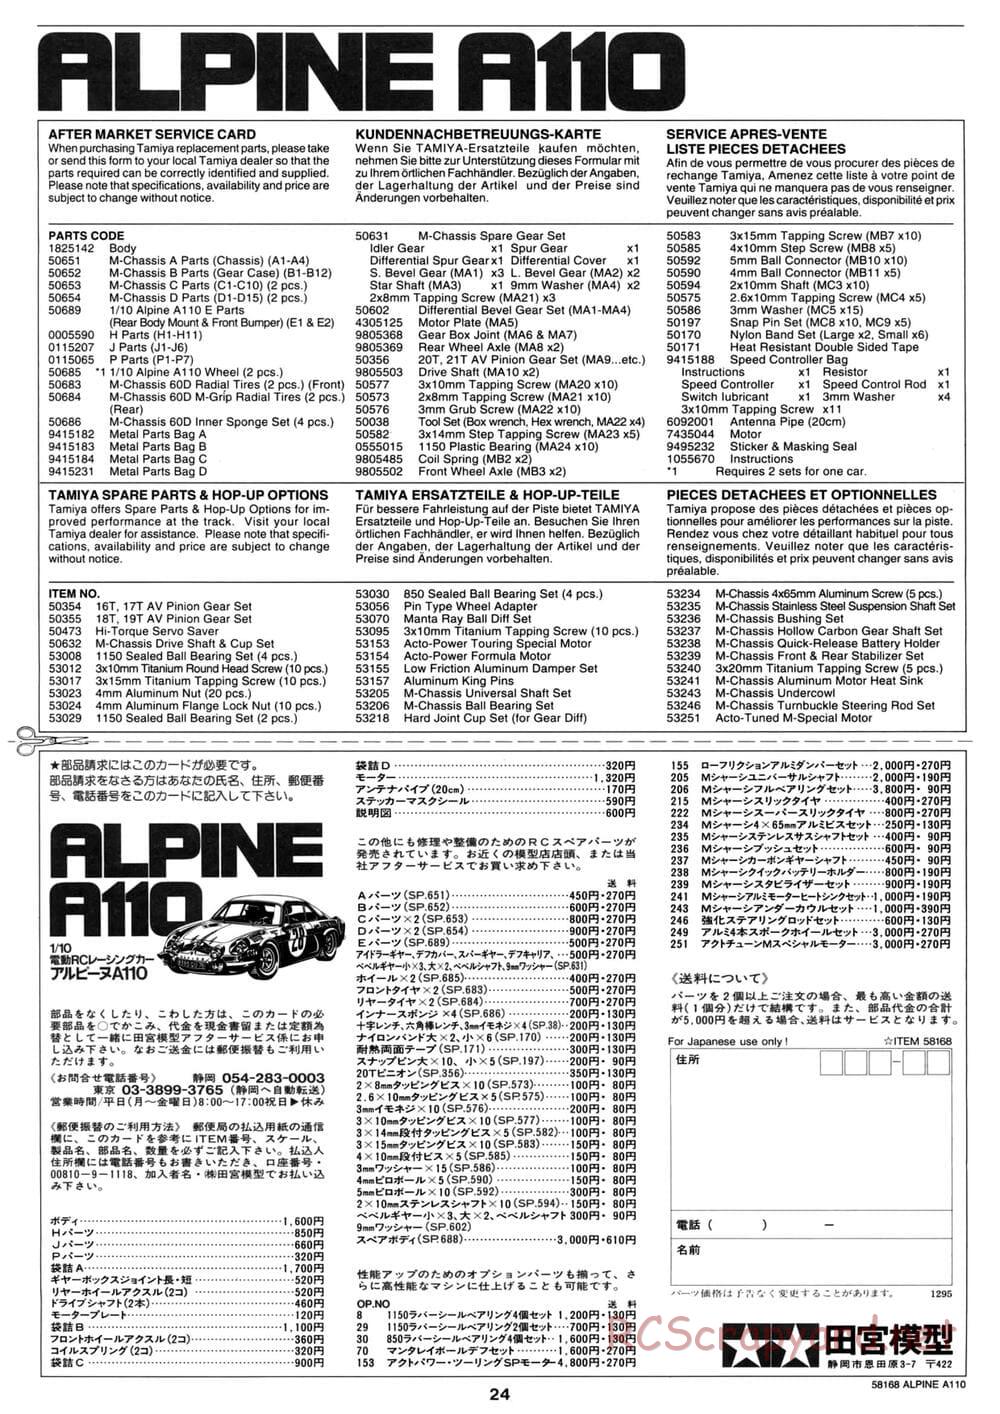 Tamiya - Alpine A110 - M02 Chassis - Manual - Page 24